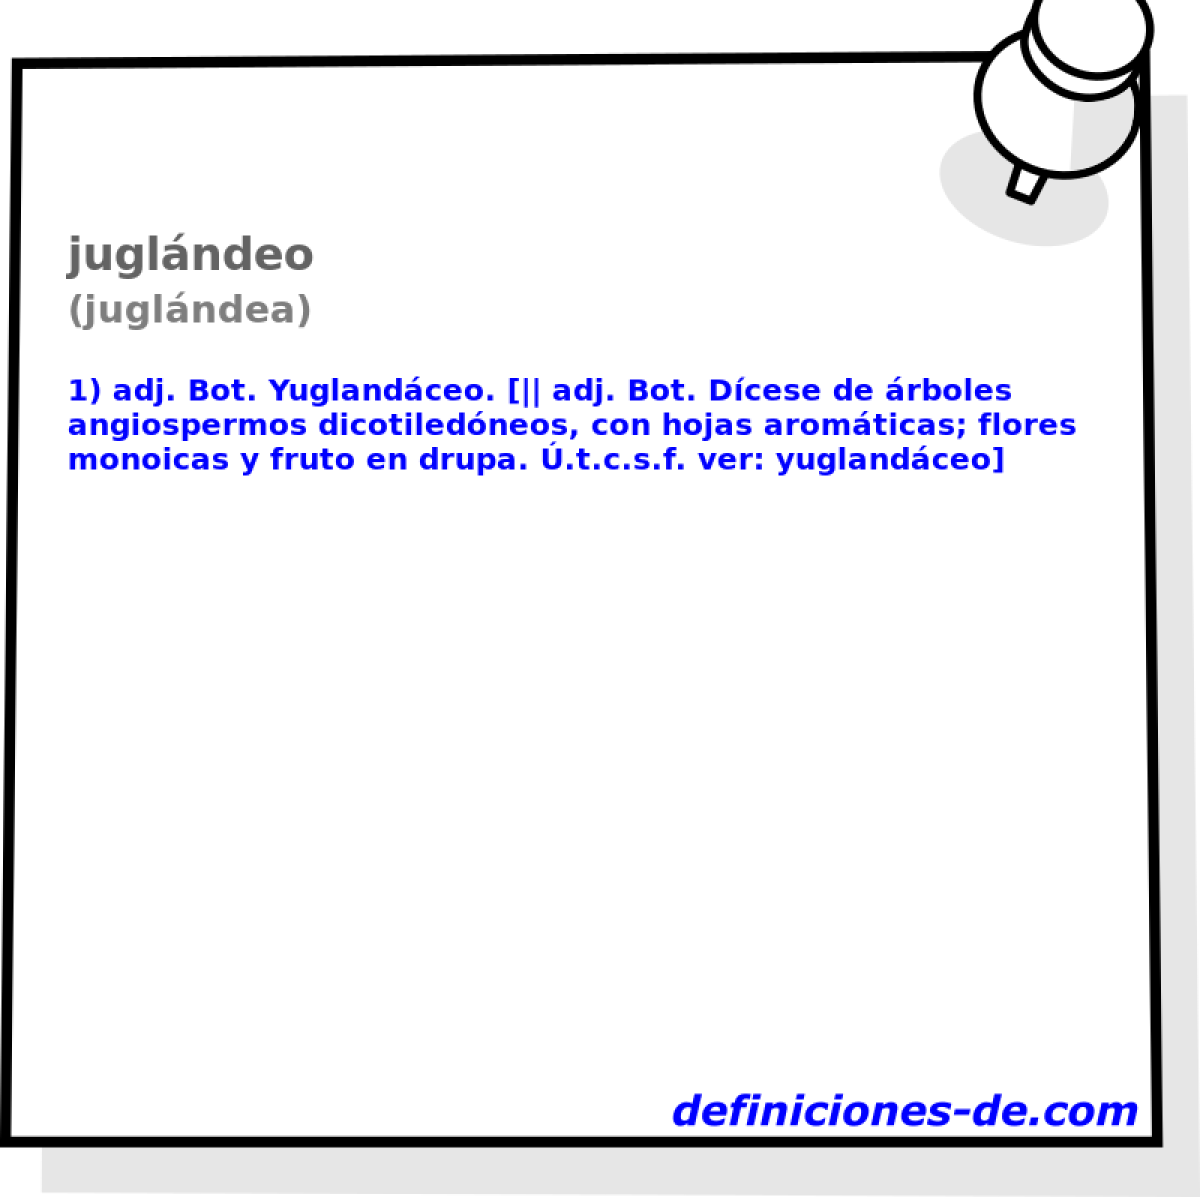 juglndeo (juglndea)